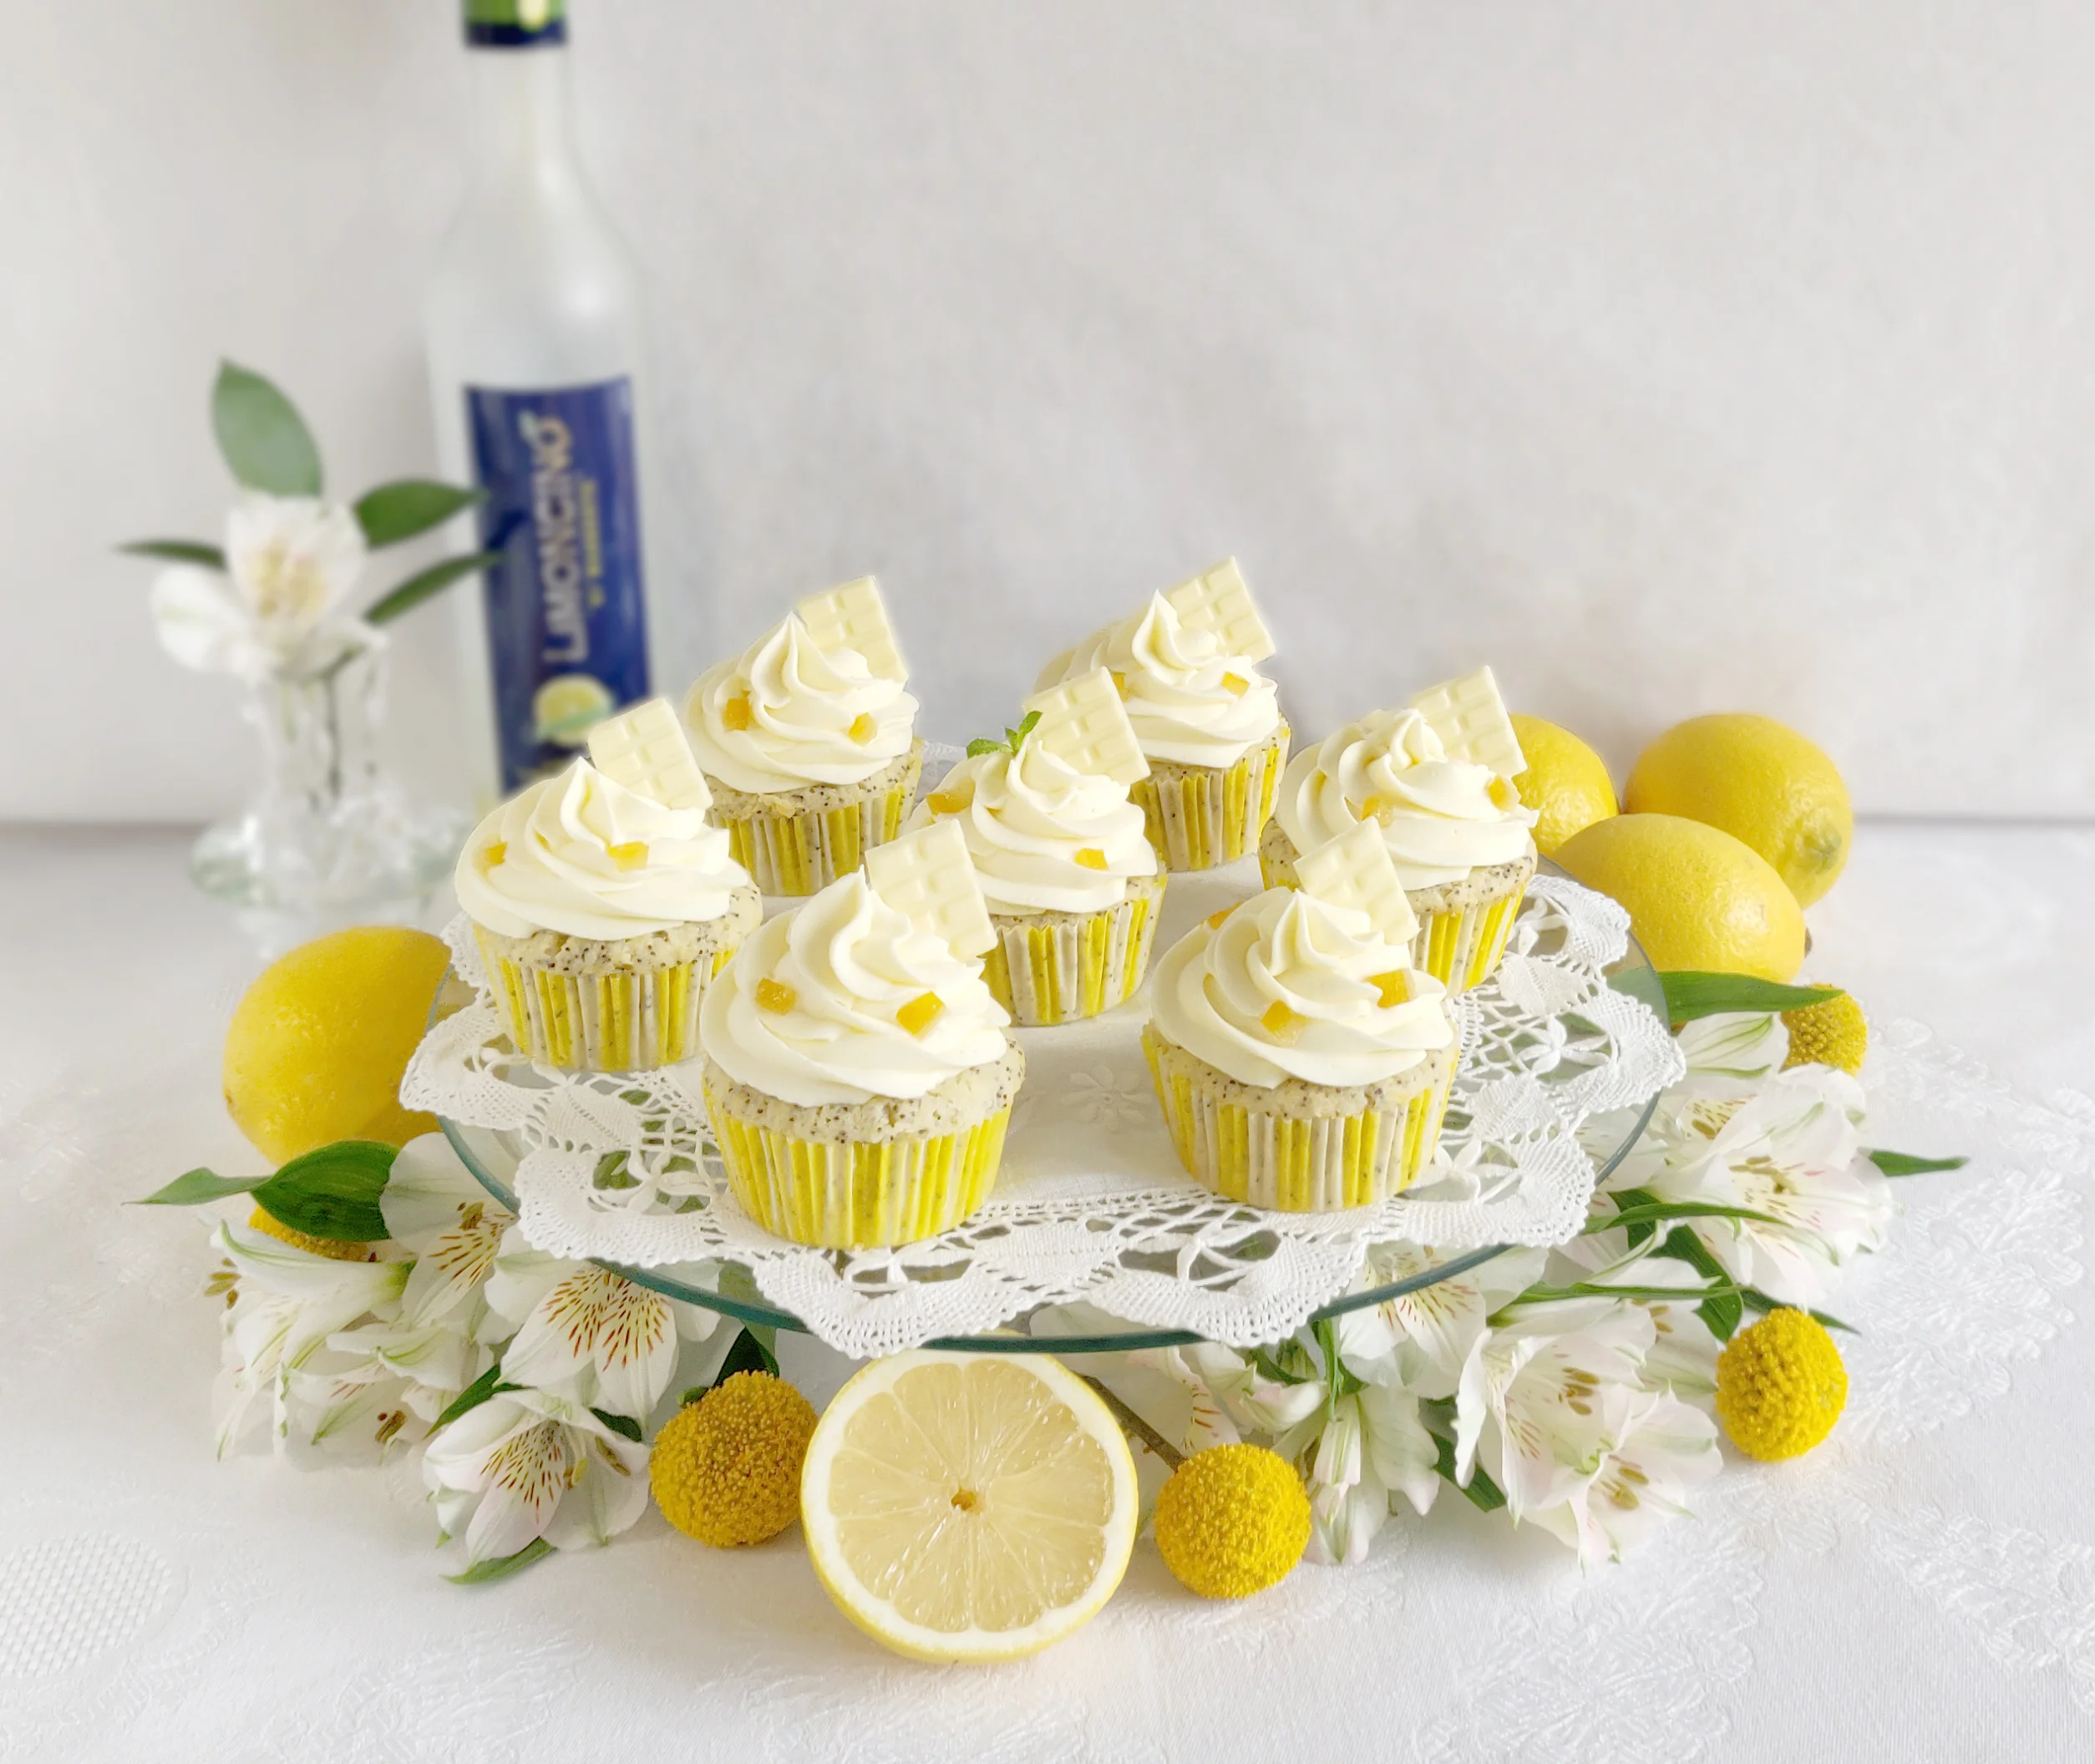 Cupcakes de limón y jengibre